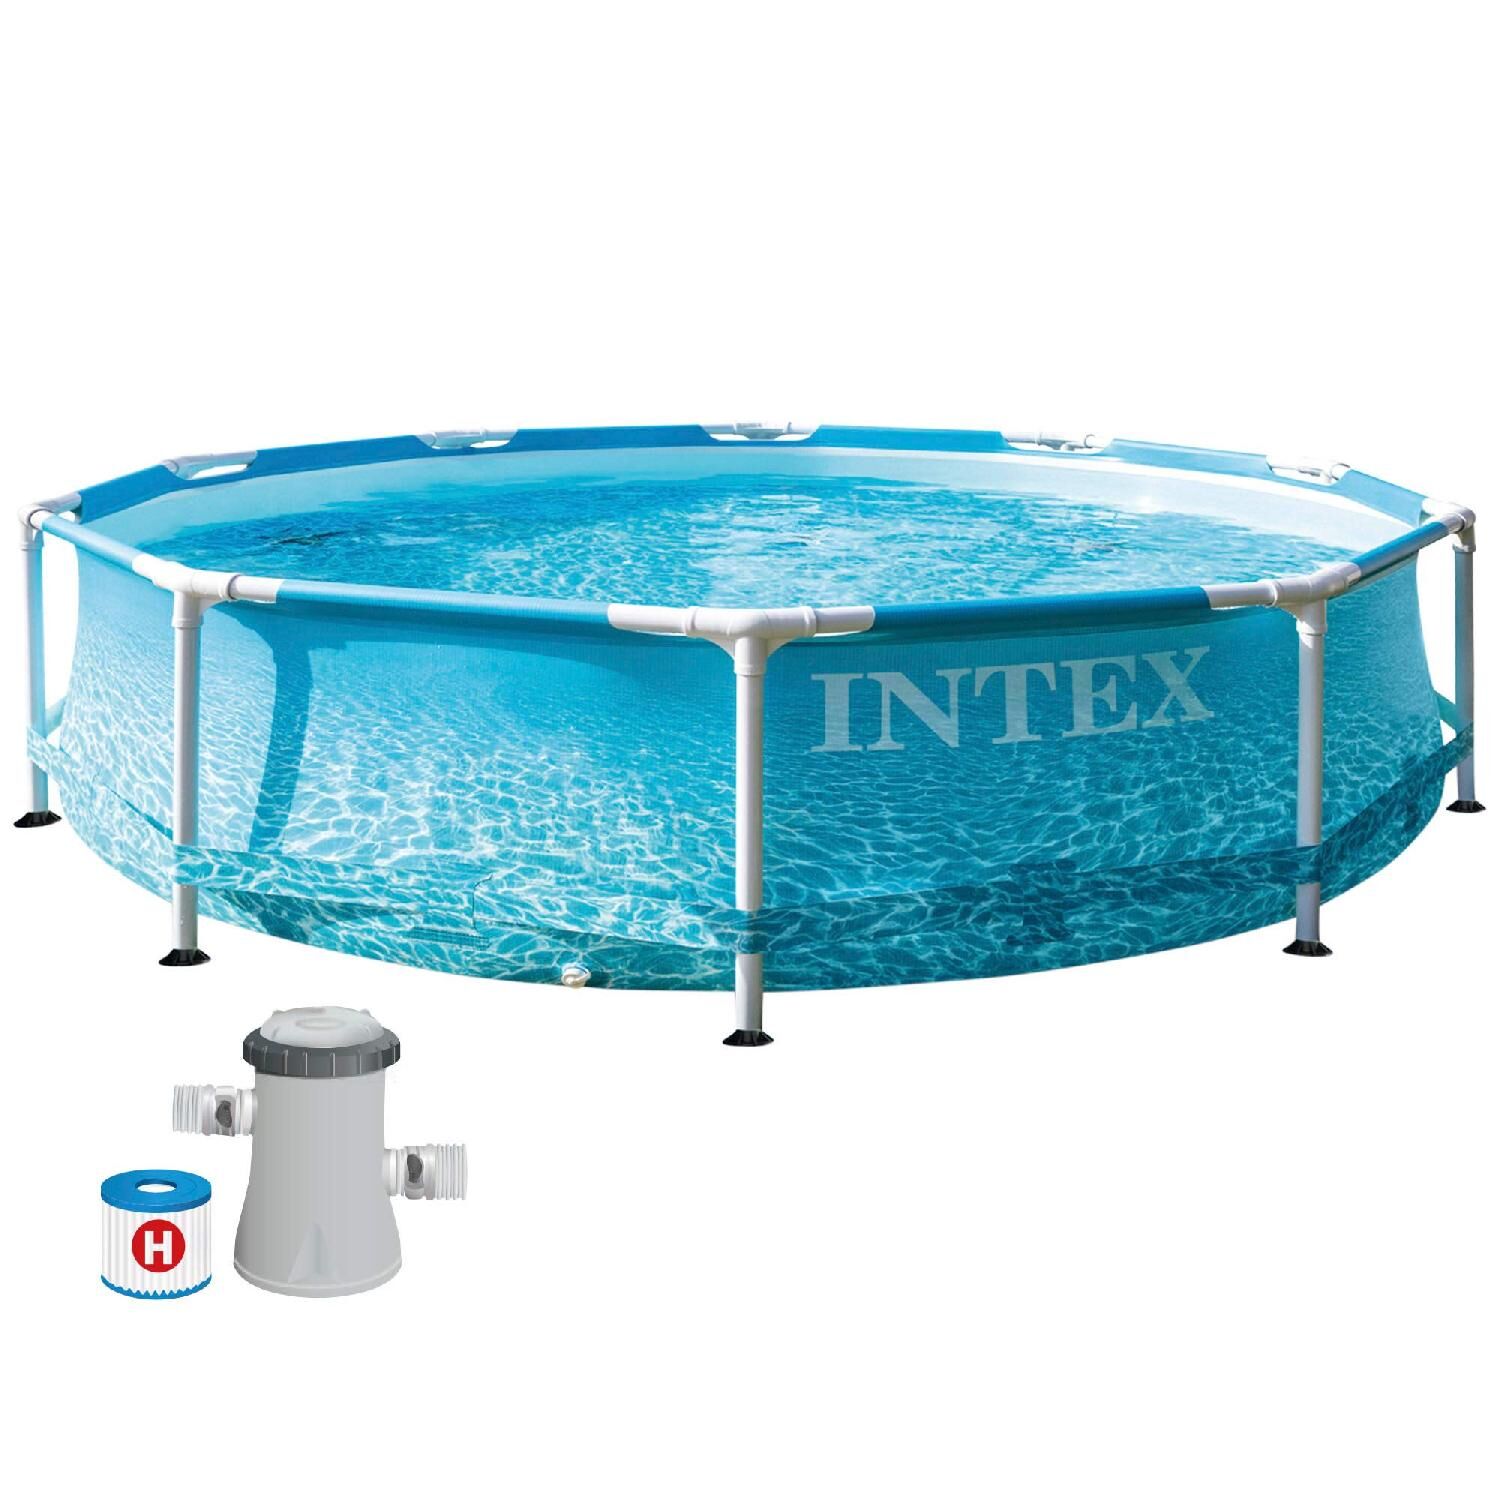 intex 28208 piscina fuori terra con telaio portante piscina esterna da giardino rotonda 305x70cm con pompa filtro - 28208 frame